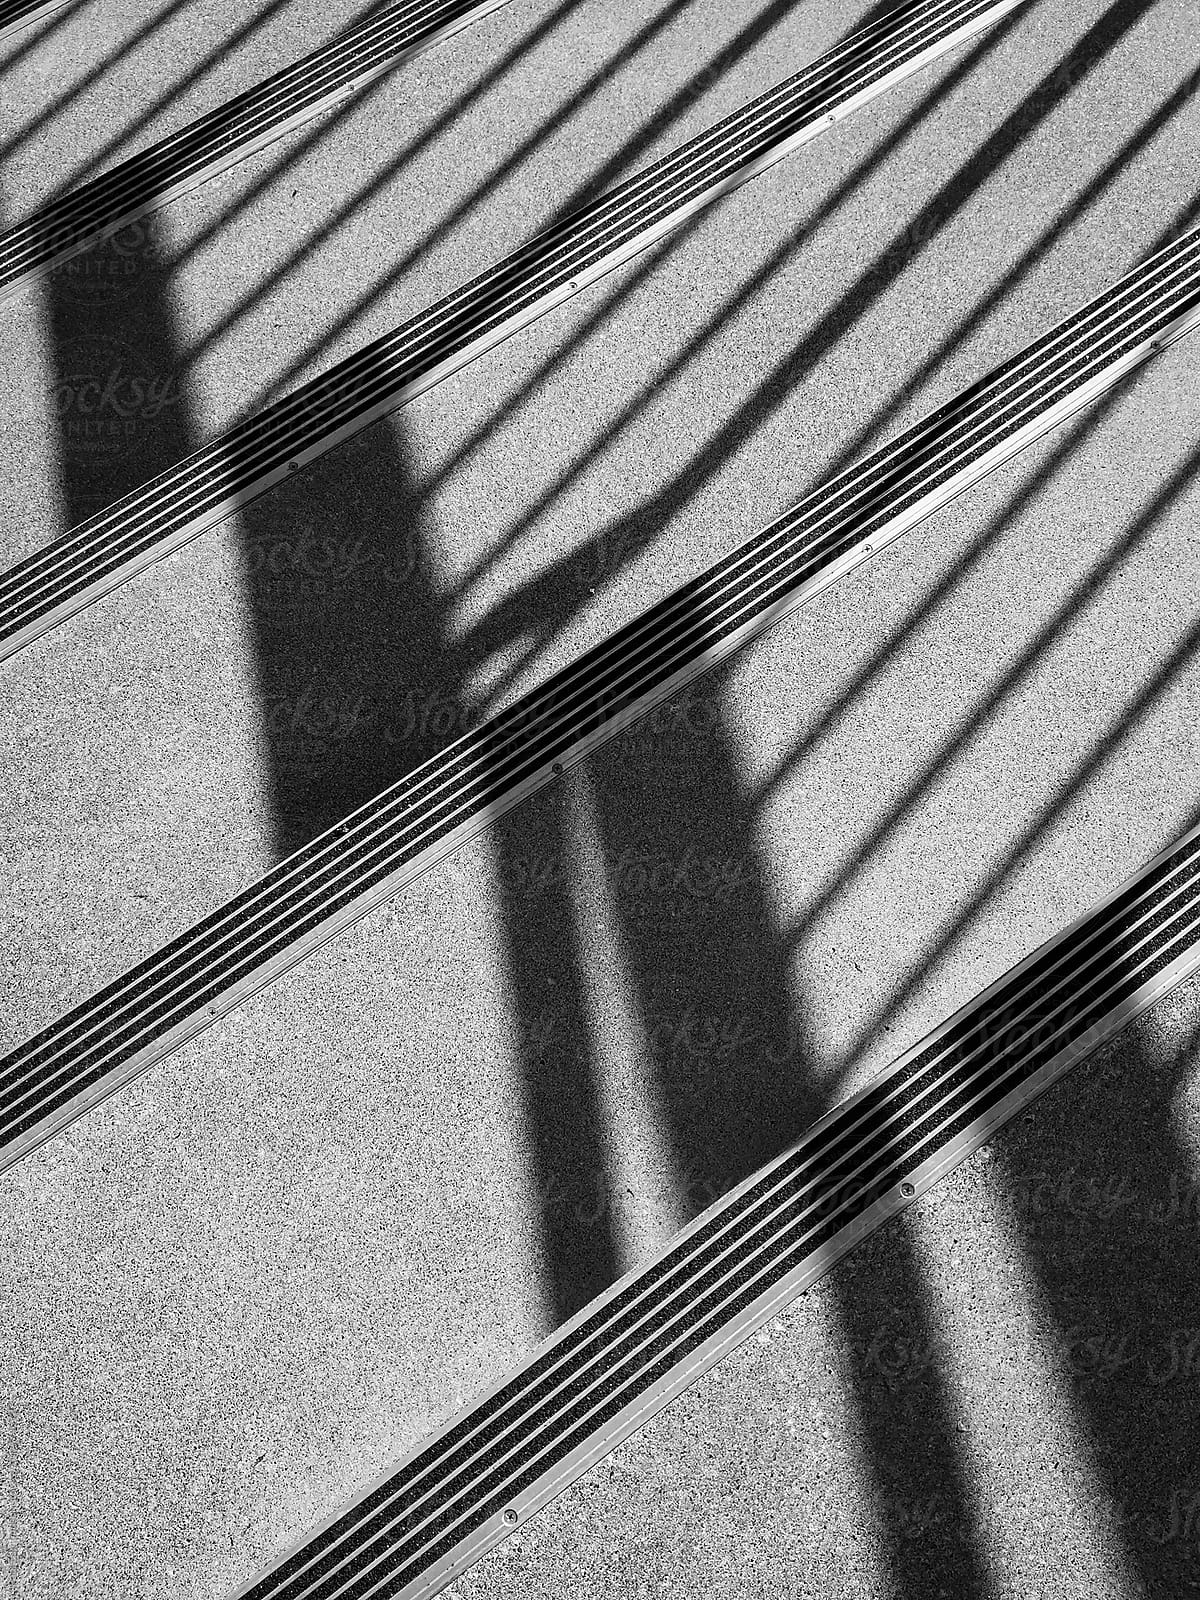 Modern concrete steps and shadows